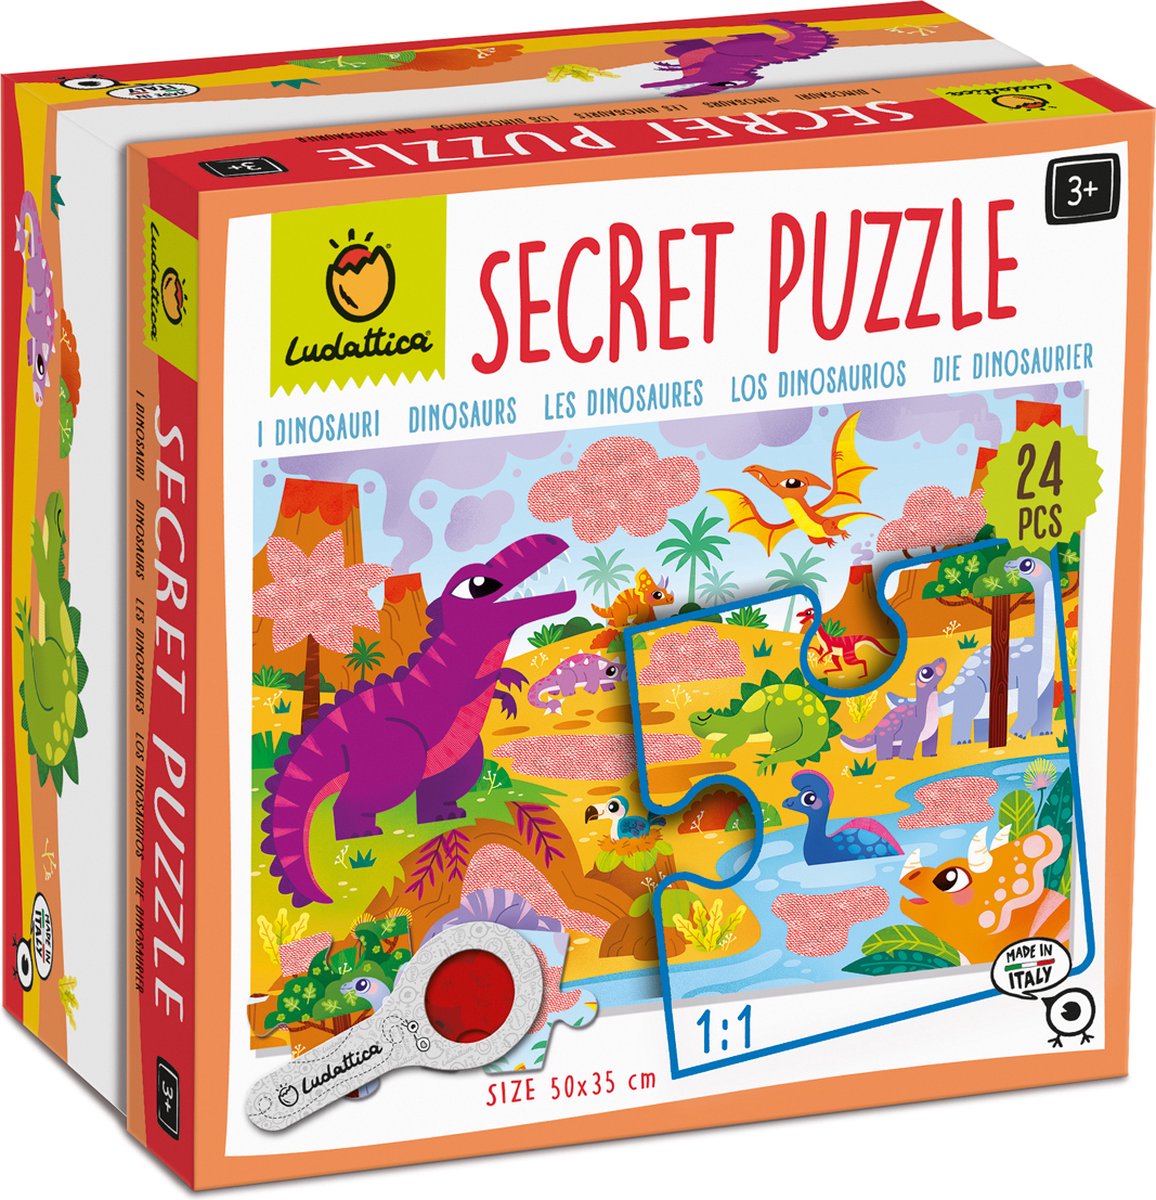 Geheime Puzzle-Dinosaurier